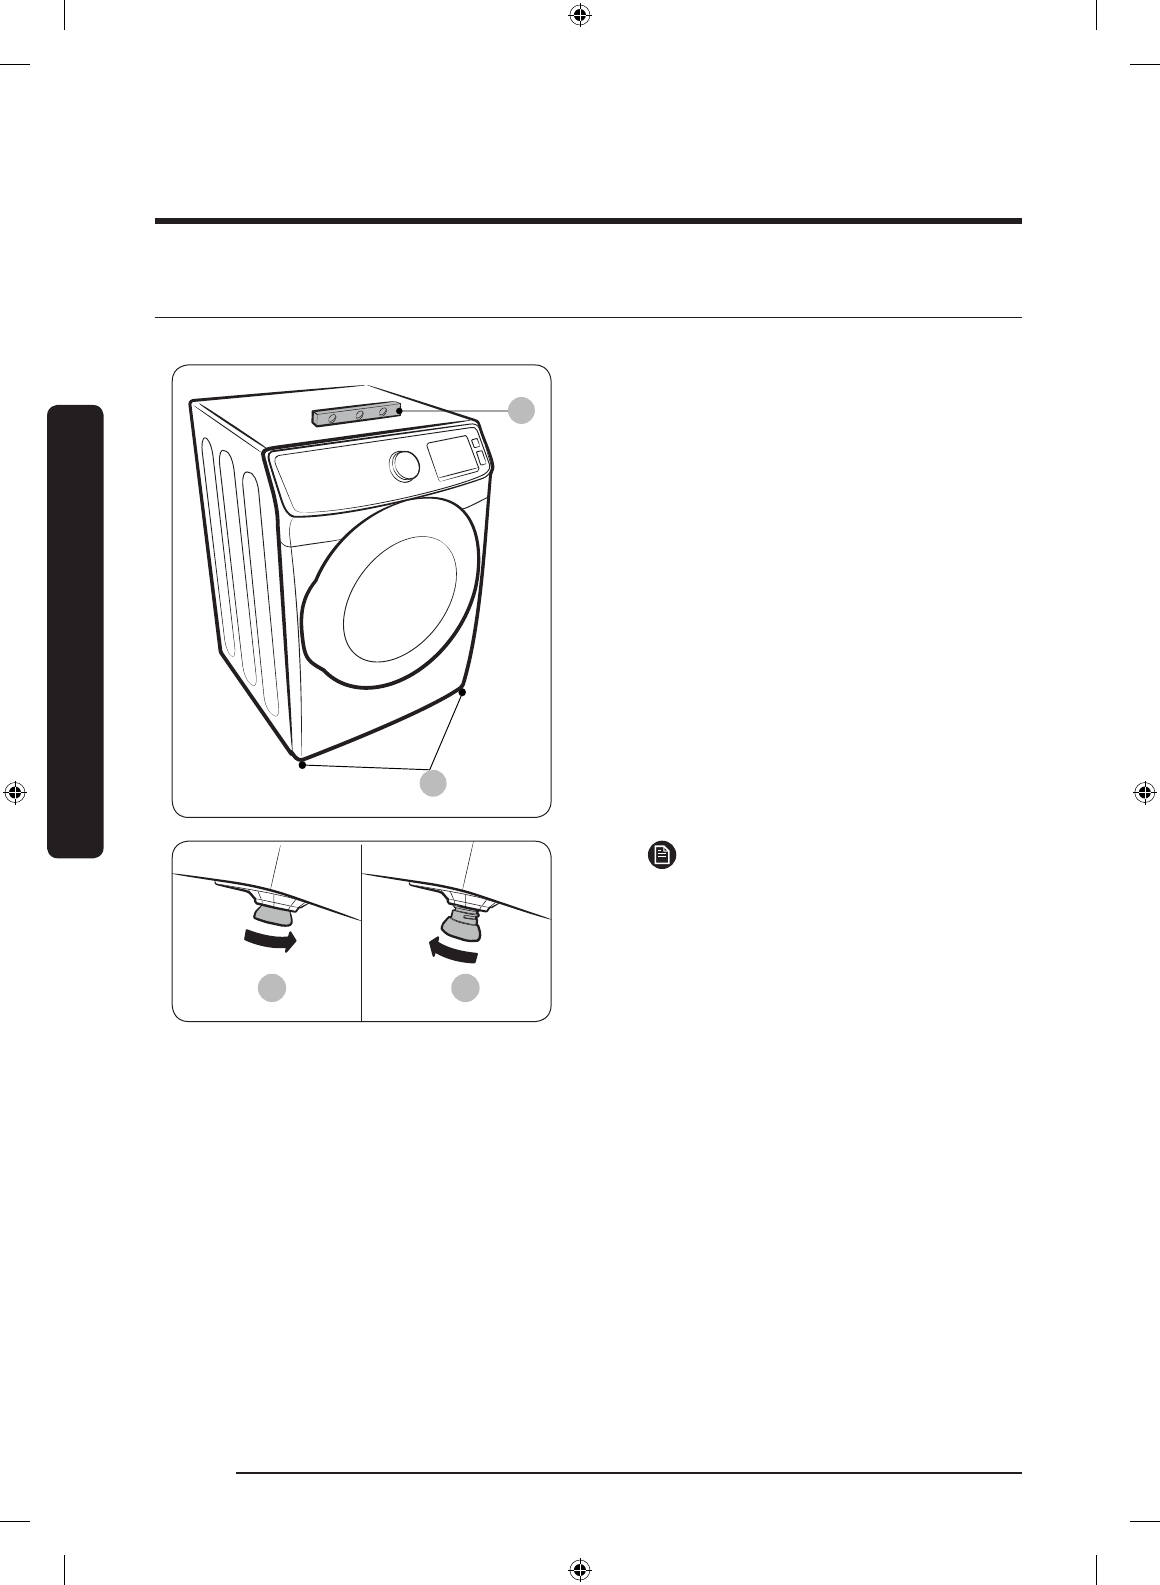 samsung dryer troubleshooting manual